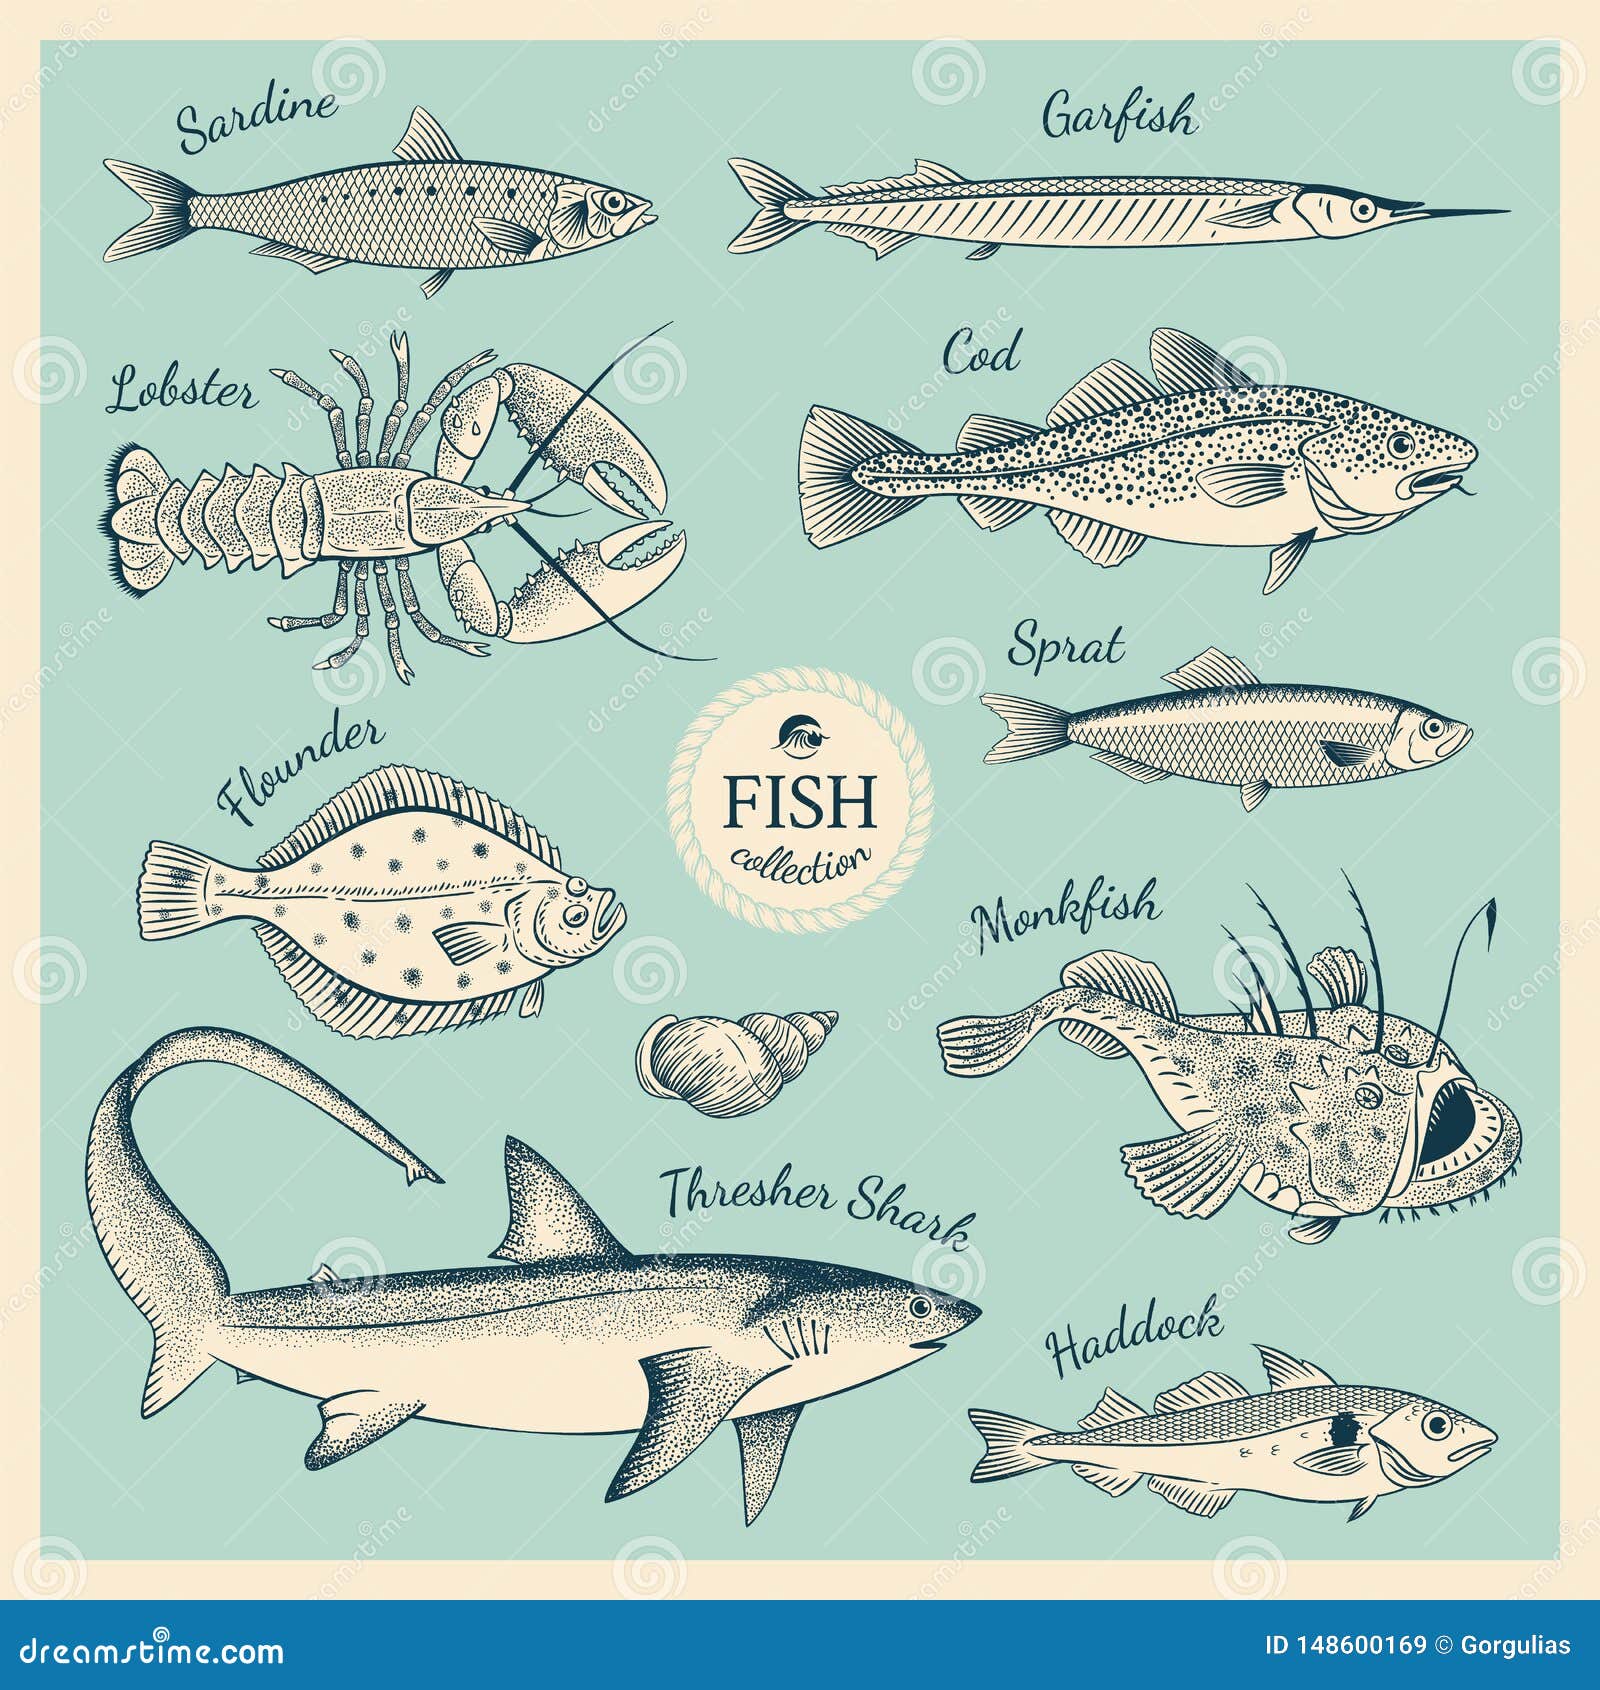 Sketch Of Haddock Fish. Underwater Wildlife Or Seafood Vector ...